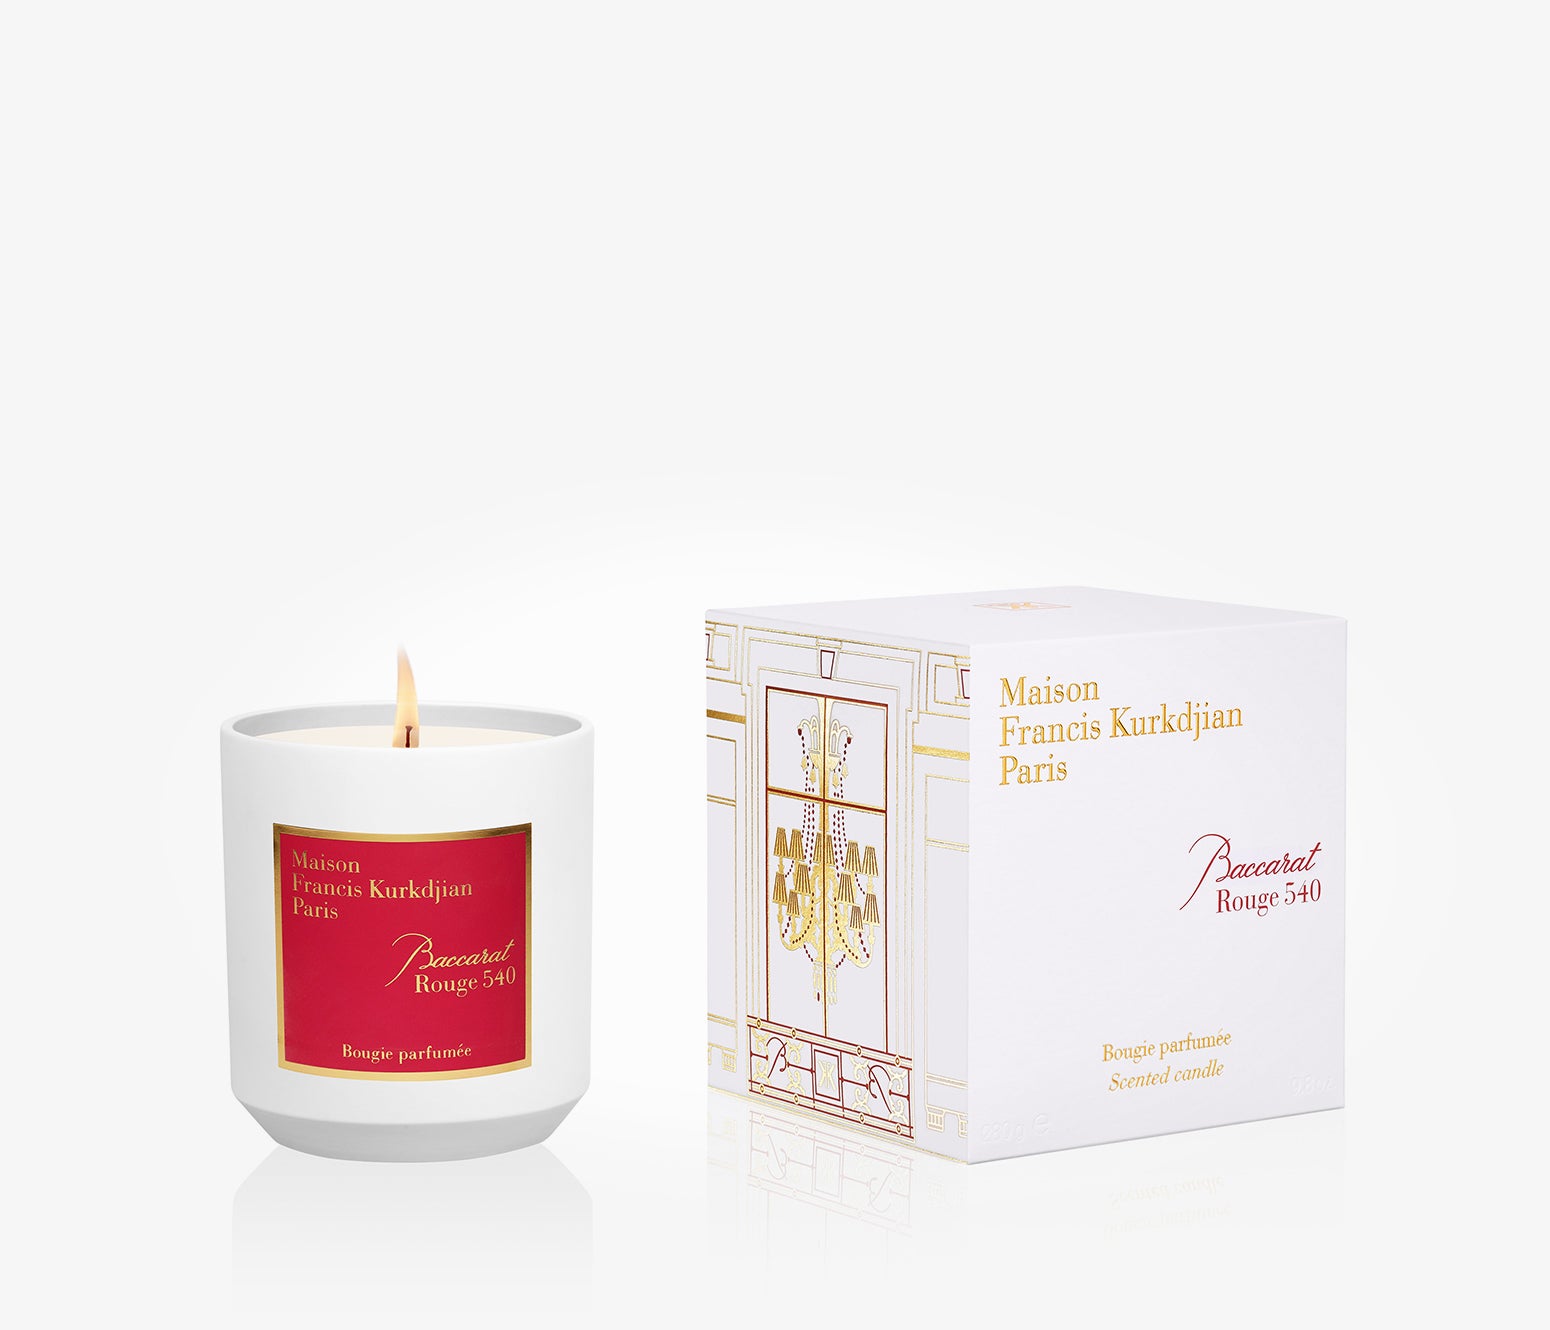 Maison Francis Kurkdjian - Baccarat Rouge 540 Candle - 280g - GBA001 - product image - Candle - Les Senteurs